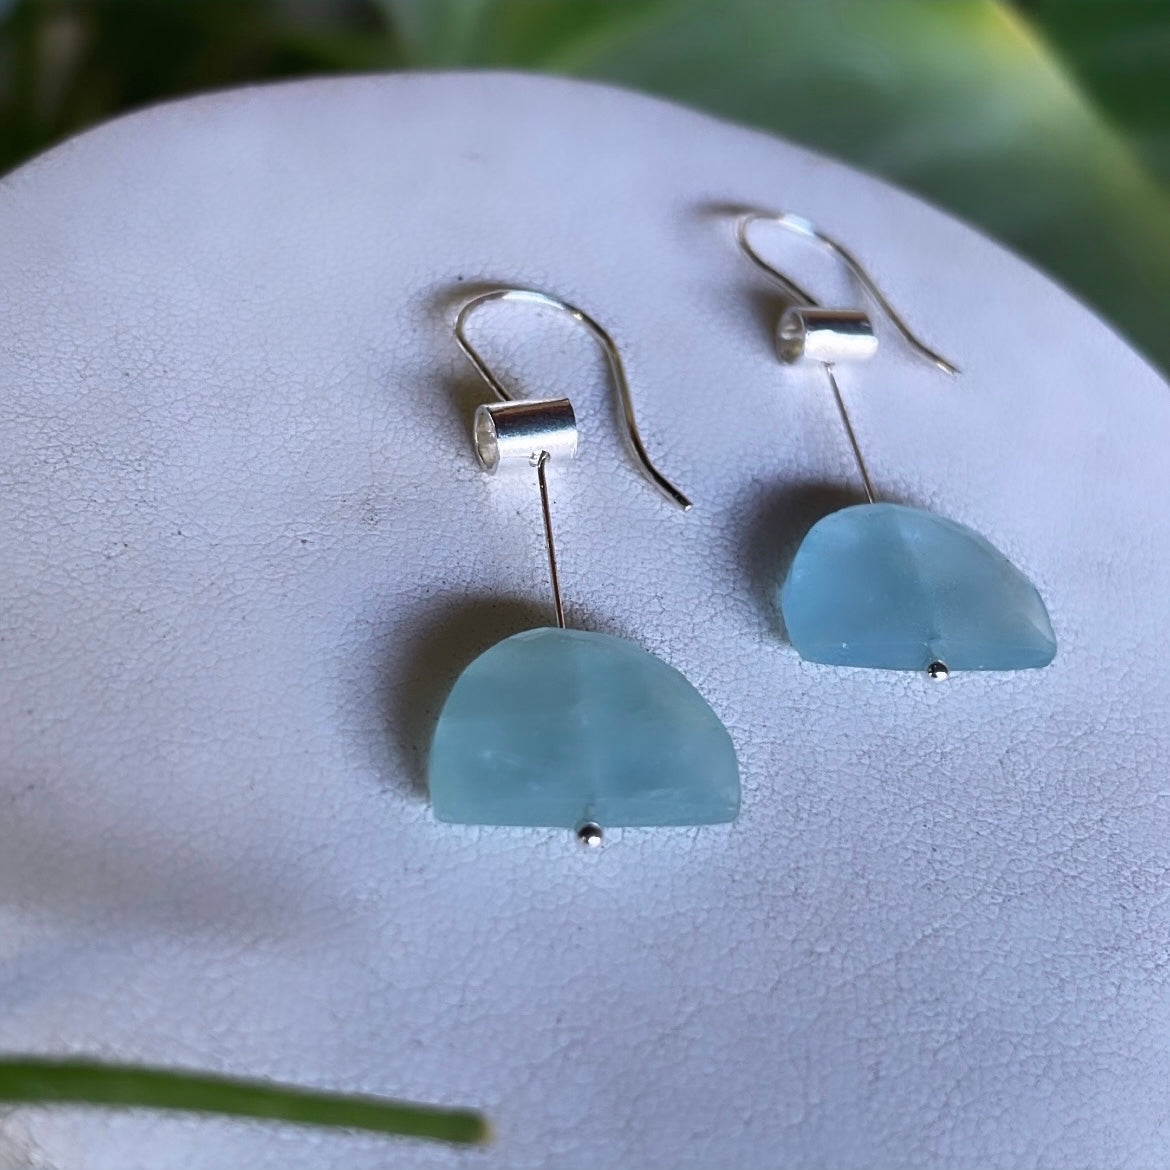 Pivot Umbrella aquamarines earrings-serena kojimoto studio